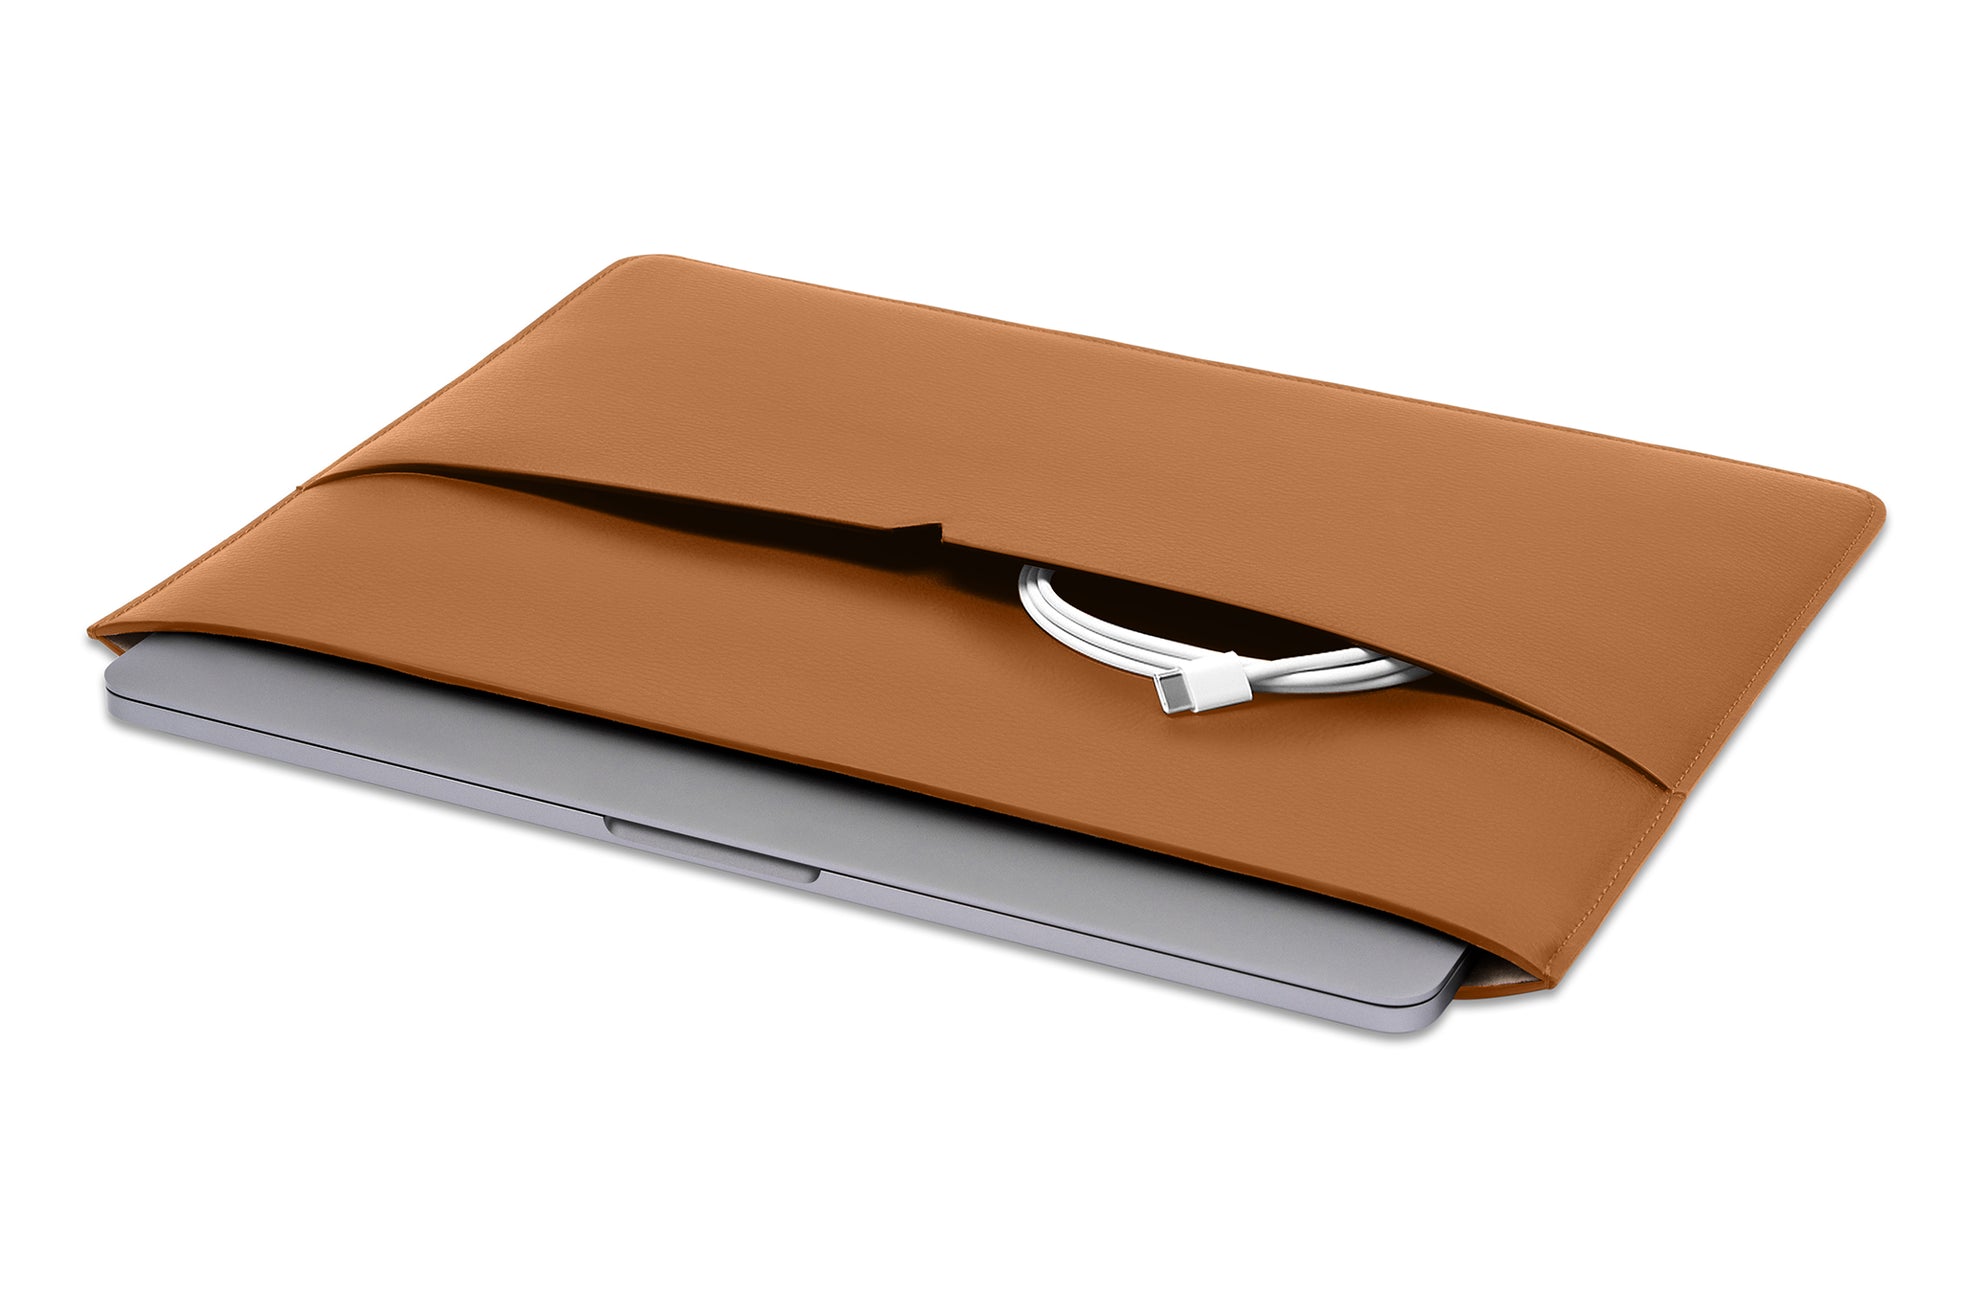 The MacBook Sleeve 13-inch - Sample Sale in Technik in Caramel image 3